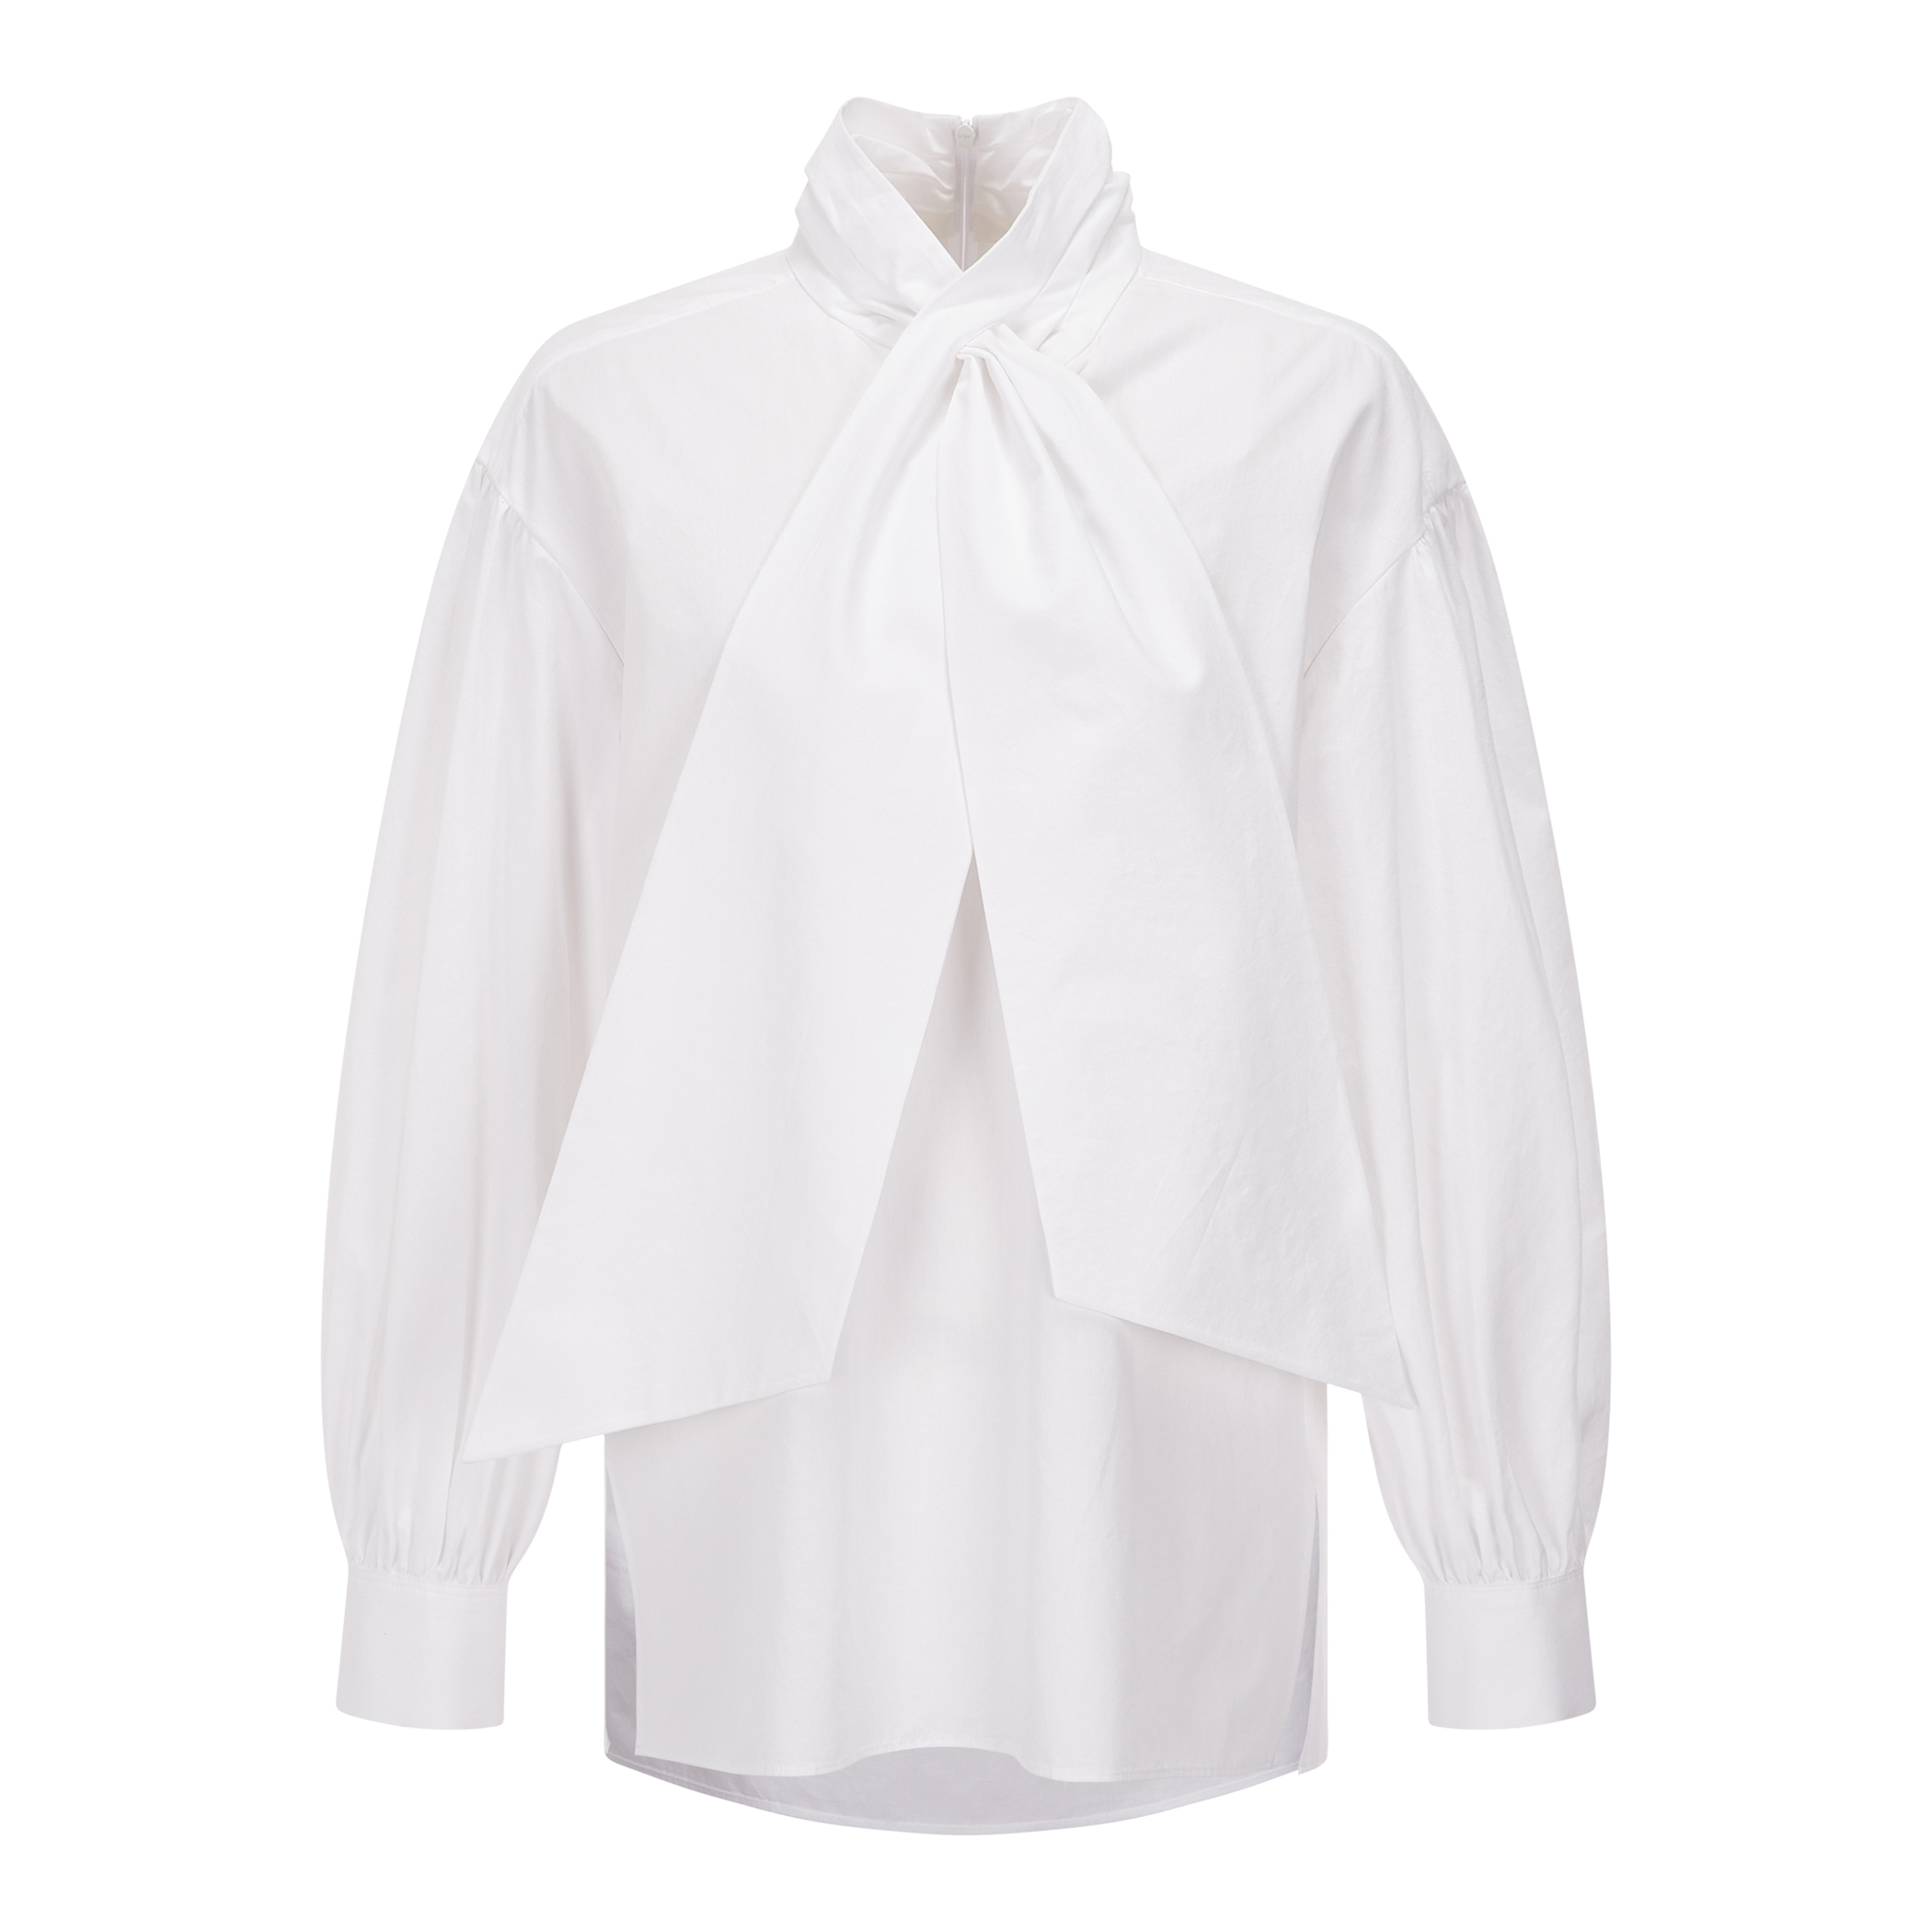 Balaca Long Sleeves Shirt (발라카 롱 슬리브 셔츠) White